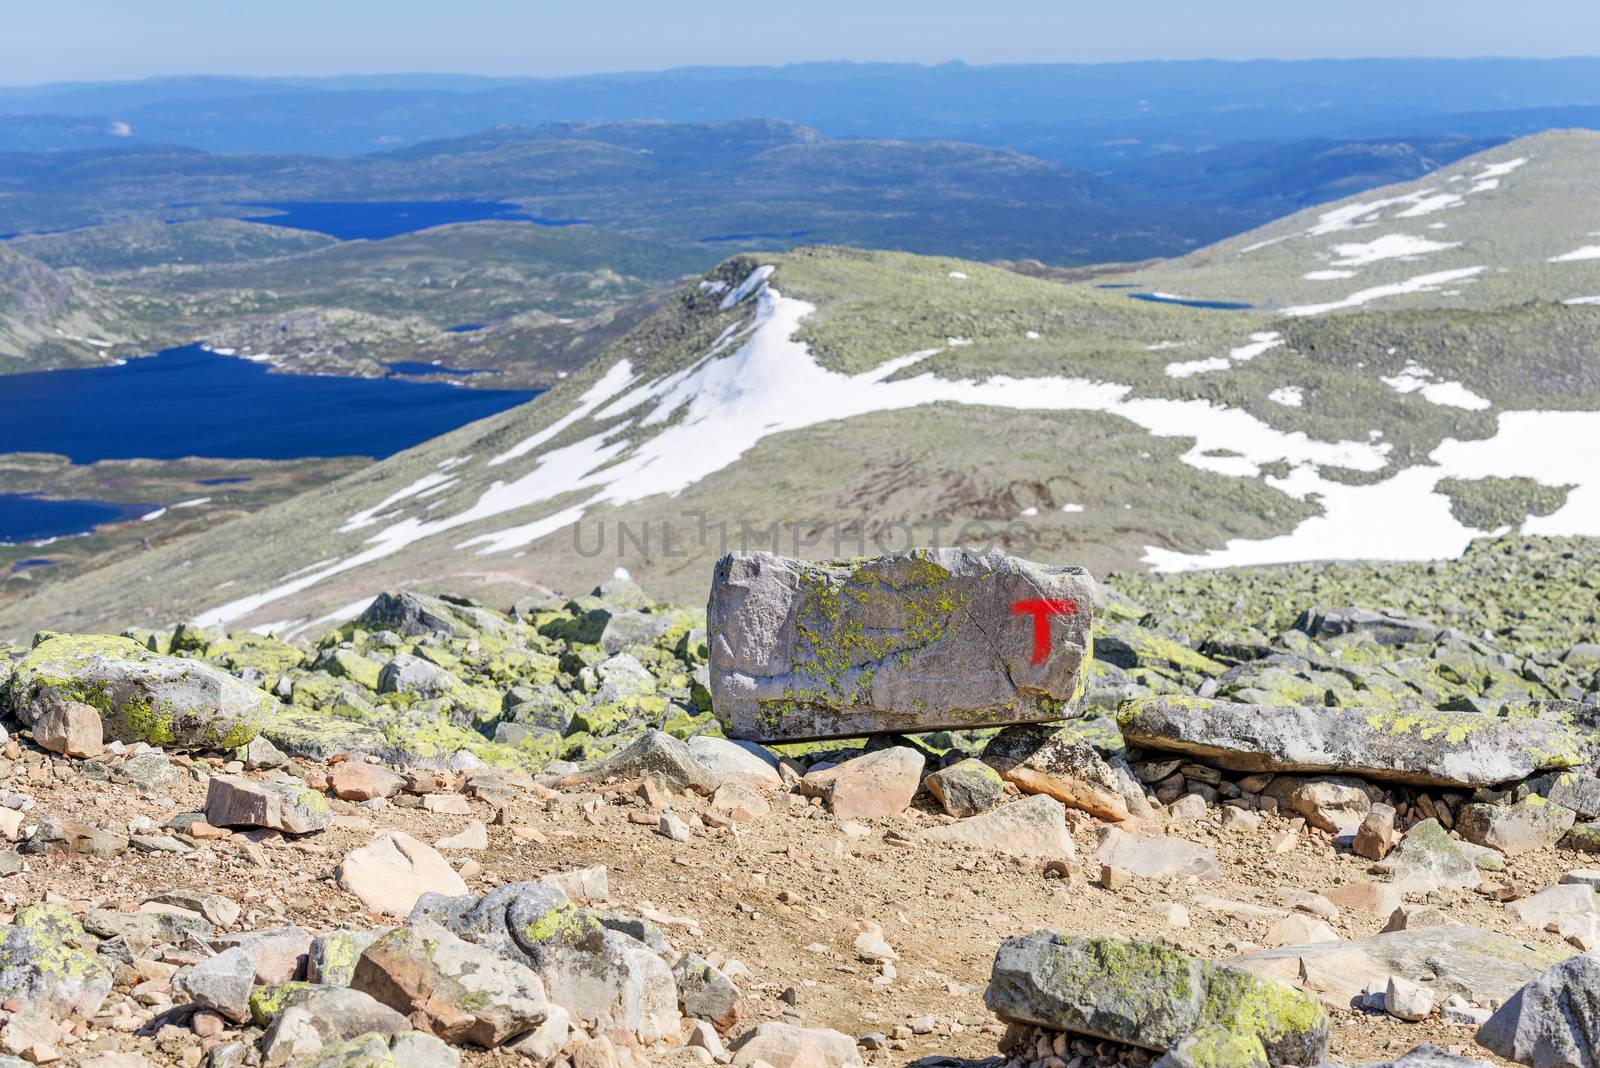 Signs of the Norwegian Trekking Association by Nanisimova